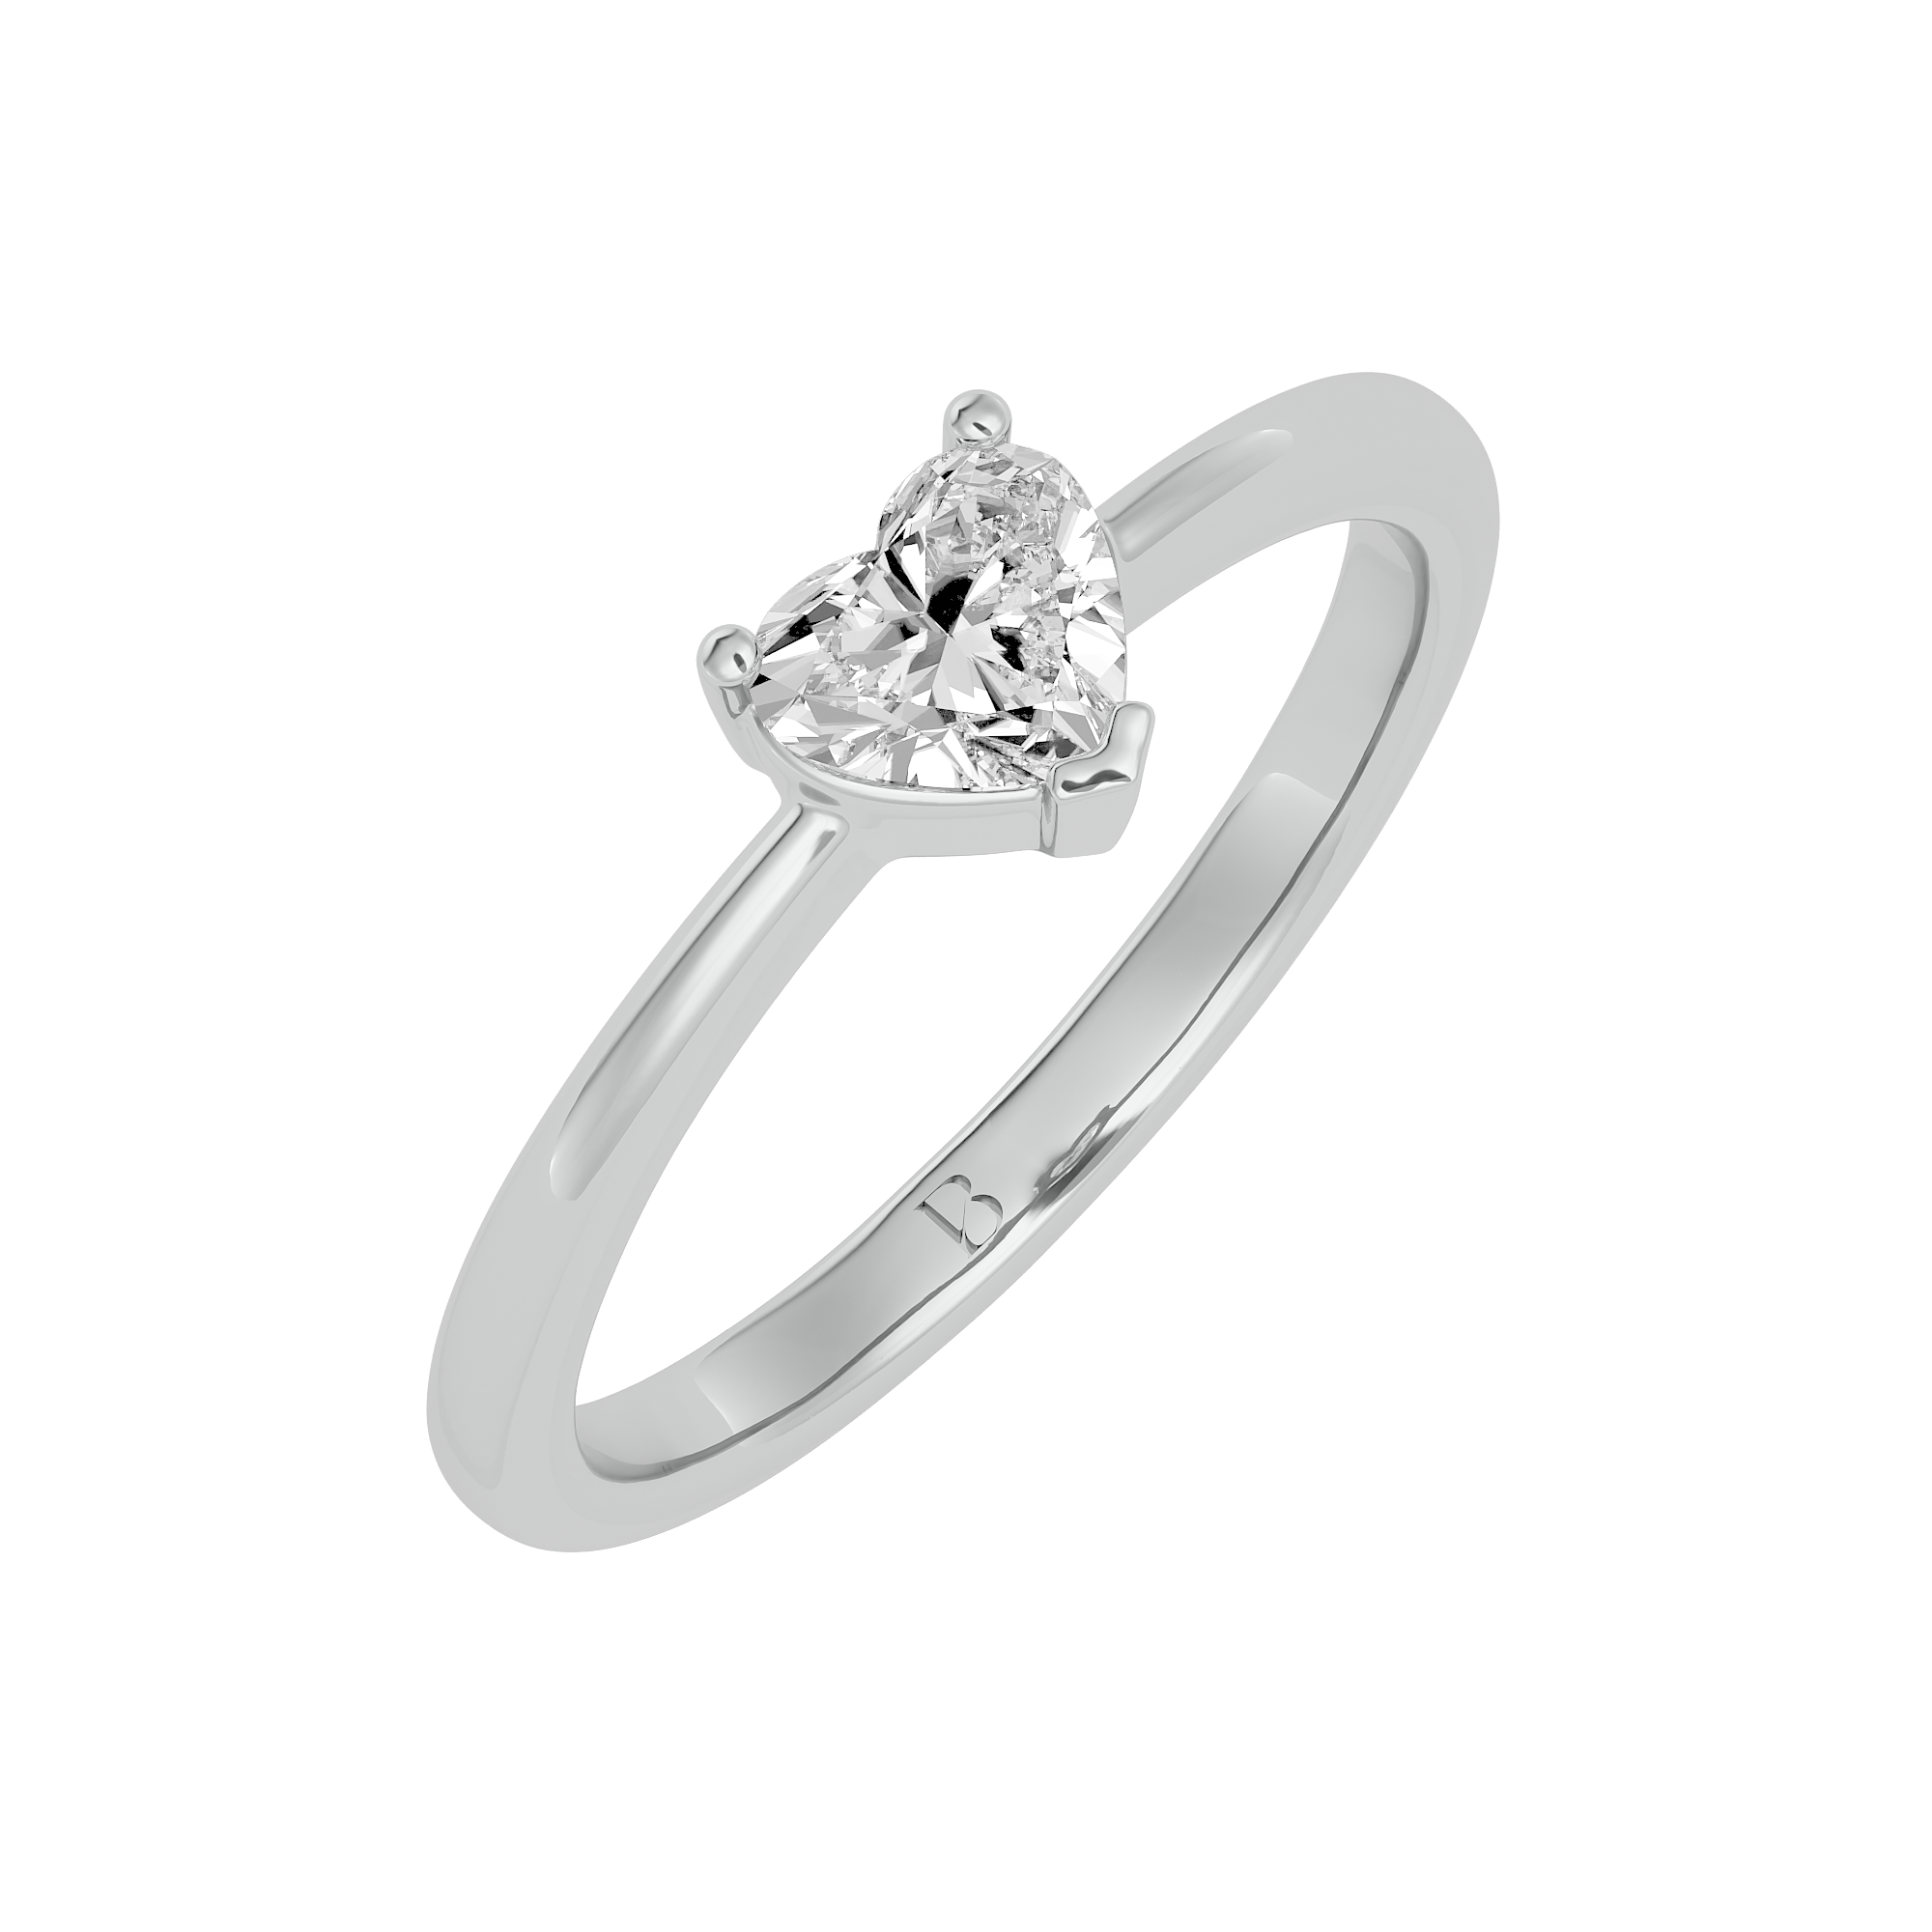 Heart Shaped Solitaire Diamond Ring in White Gold - Blu Diamonds 